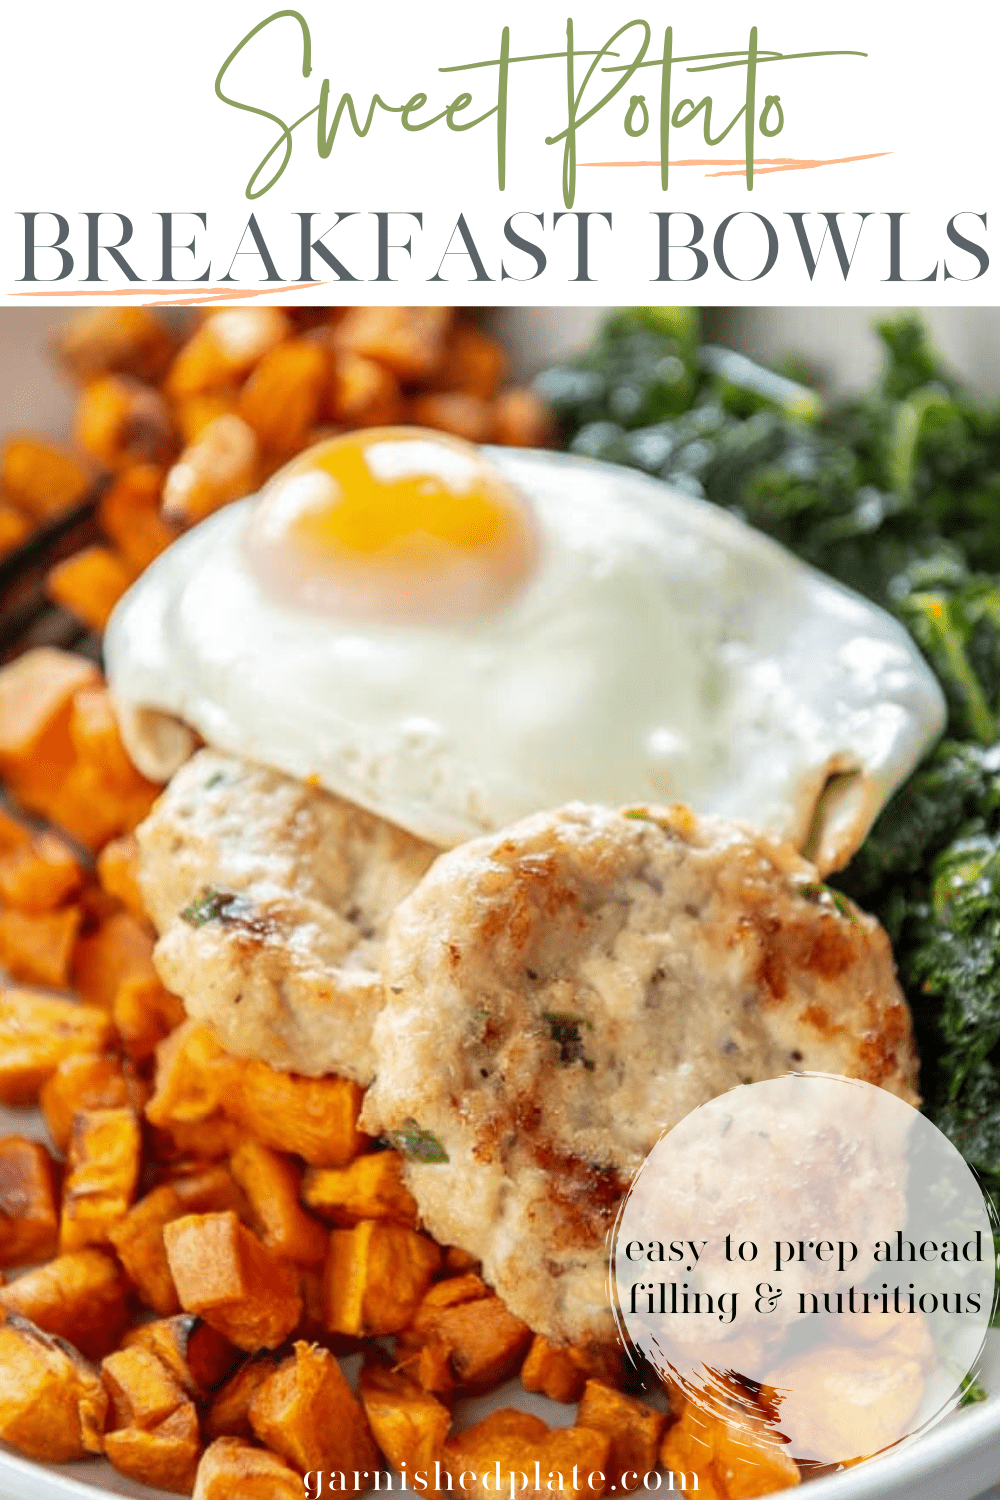 Sweet Potato Breakfast Bowls - Garnished Plate